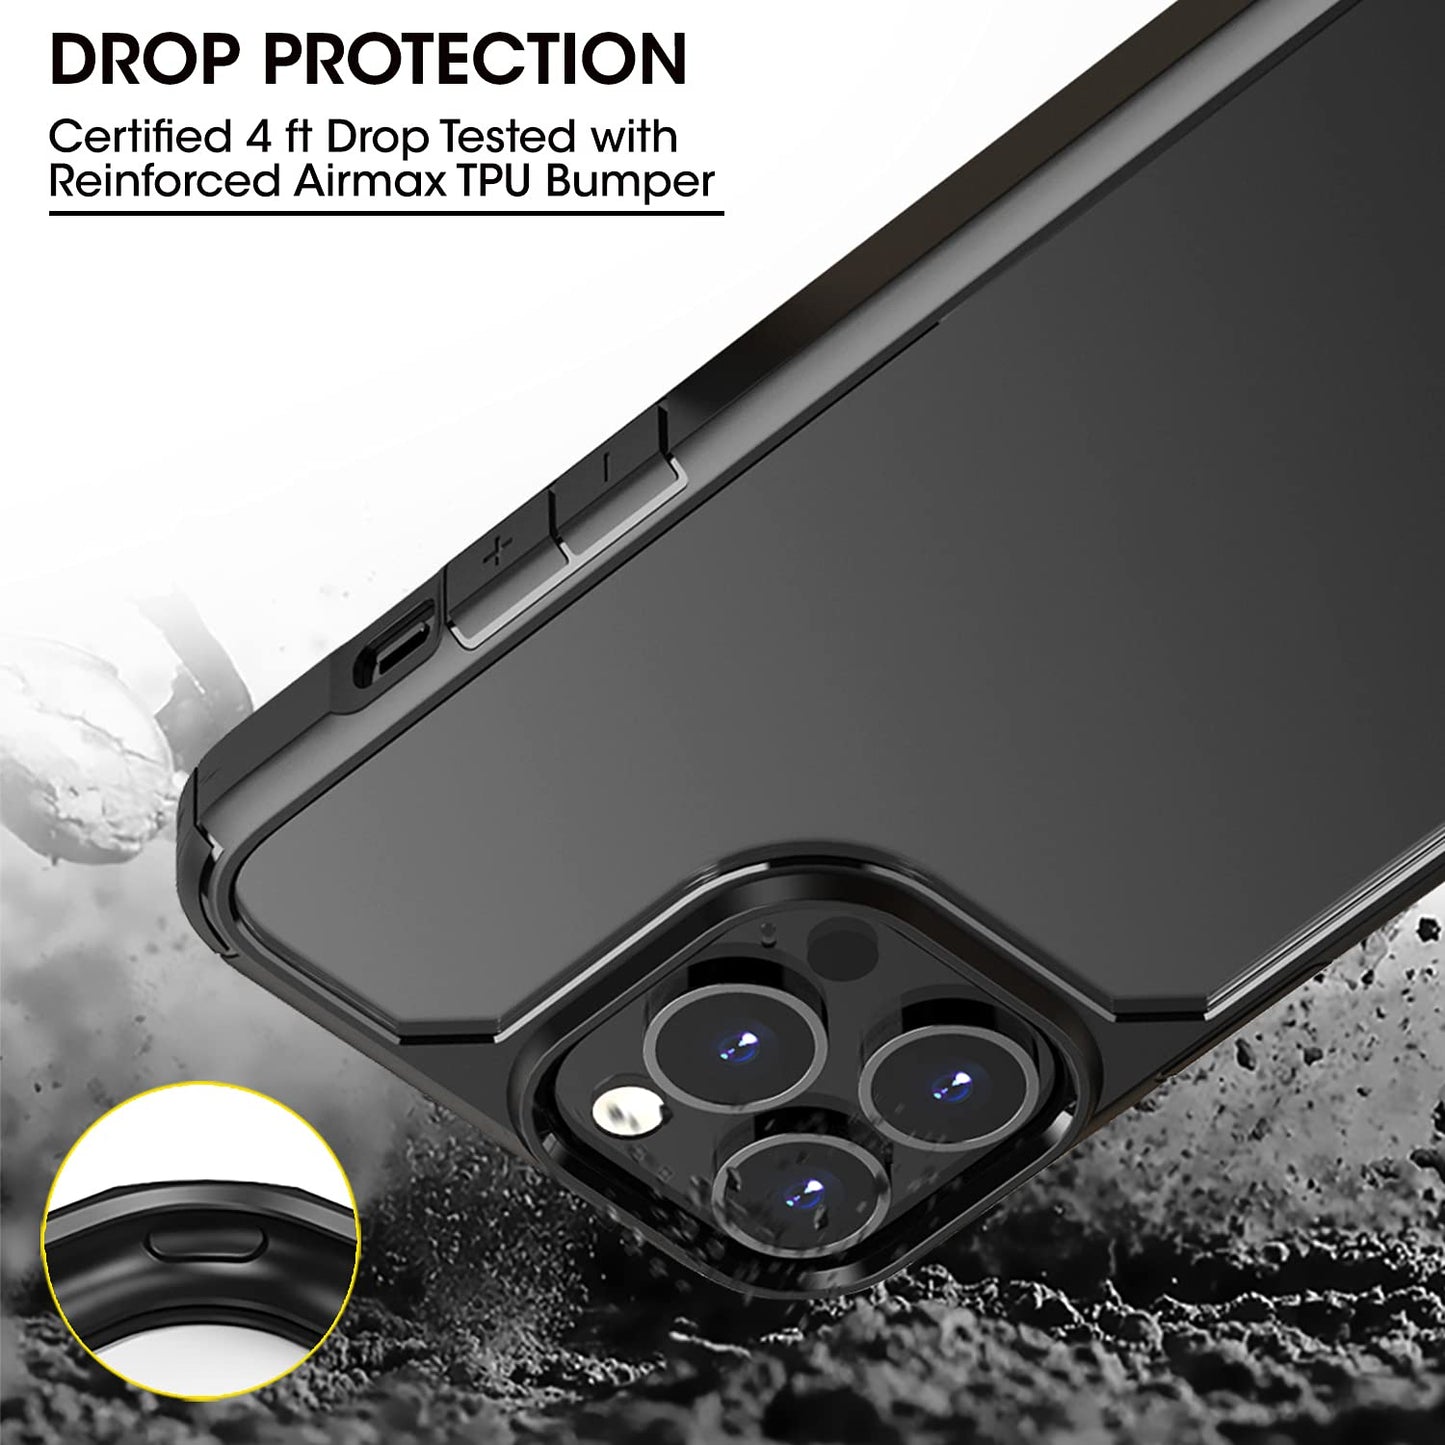 Gripp Defender Case For Apple Iphone 13 Pro Max (6.7") - Black